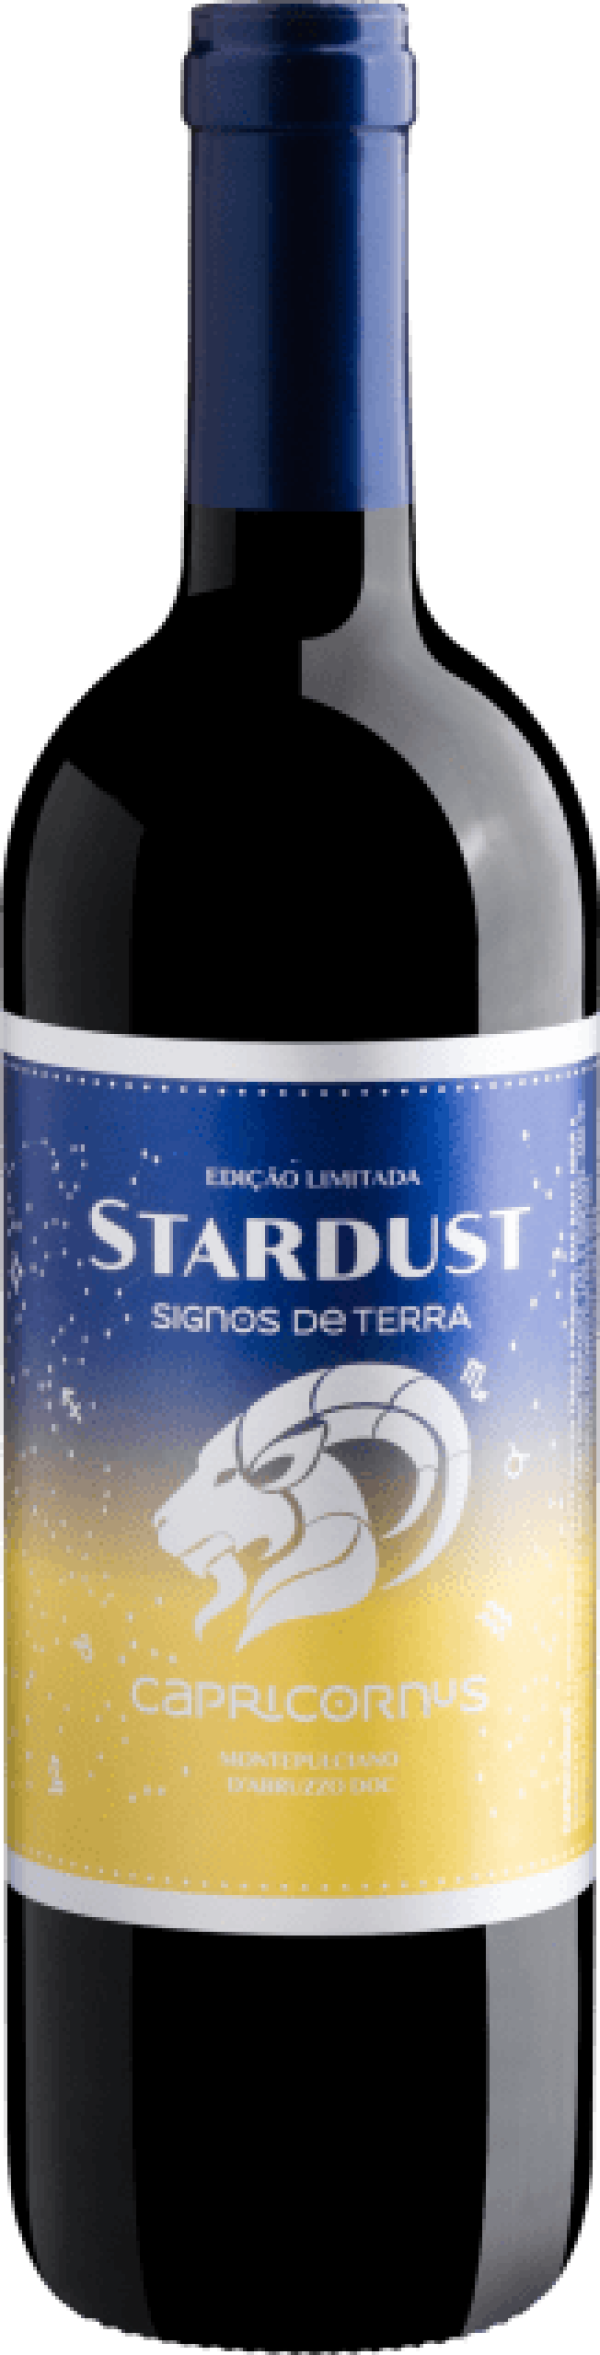 Stardust Edição Limitada Capricornus Montepulciano d’Abruzzo DOC 2019